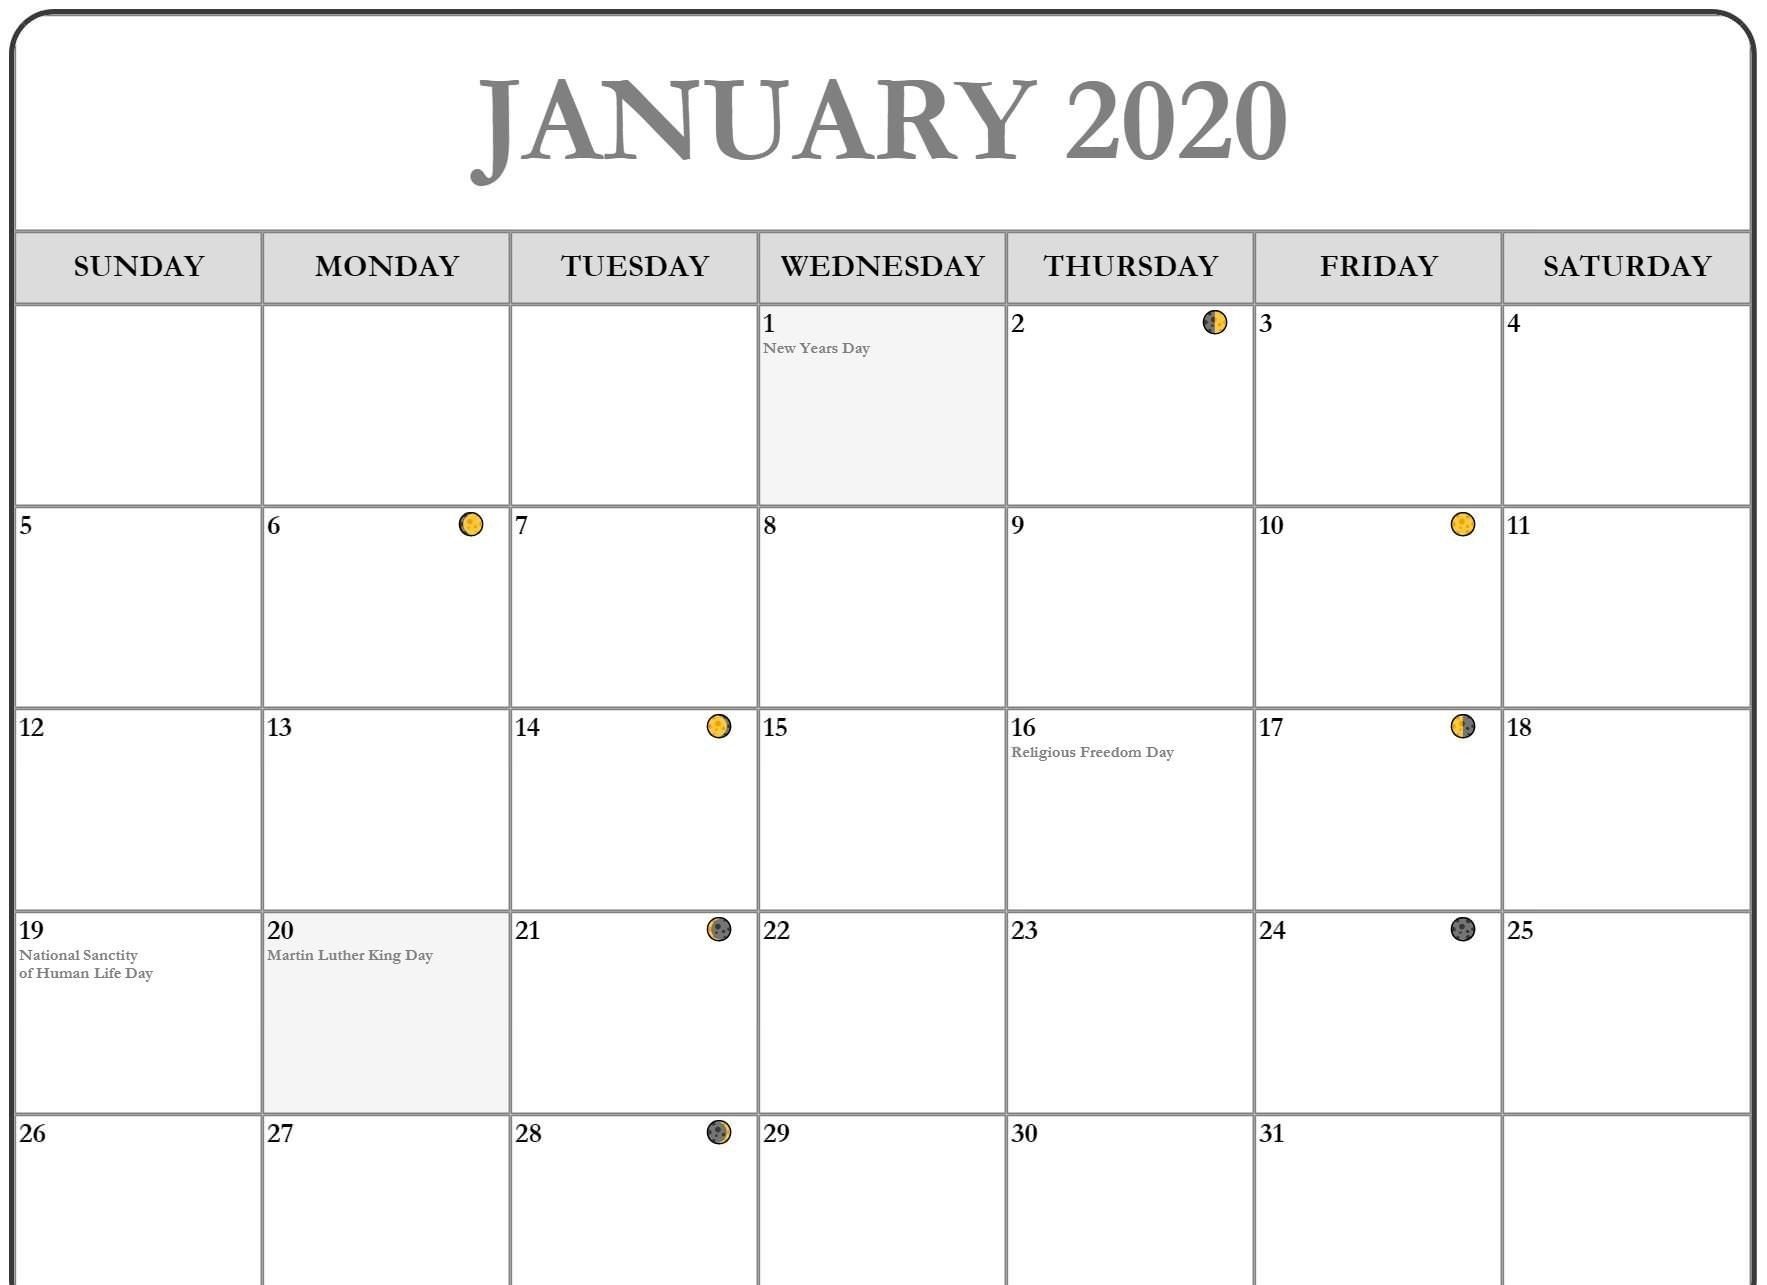 January 2020 Lunar Calendar